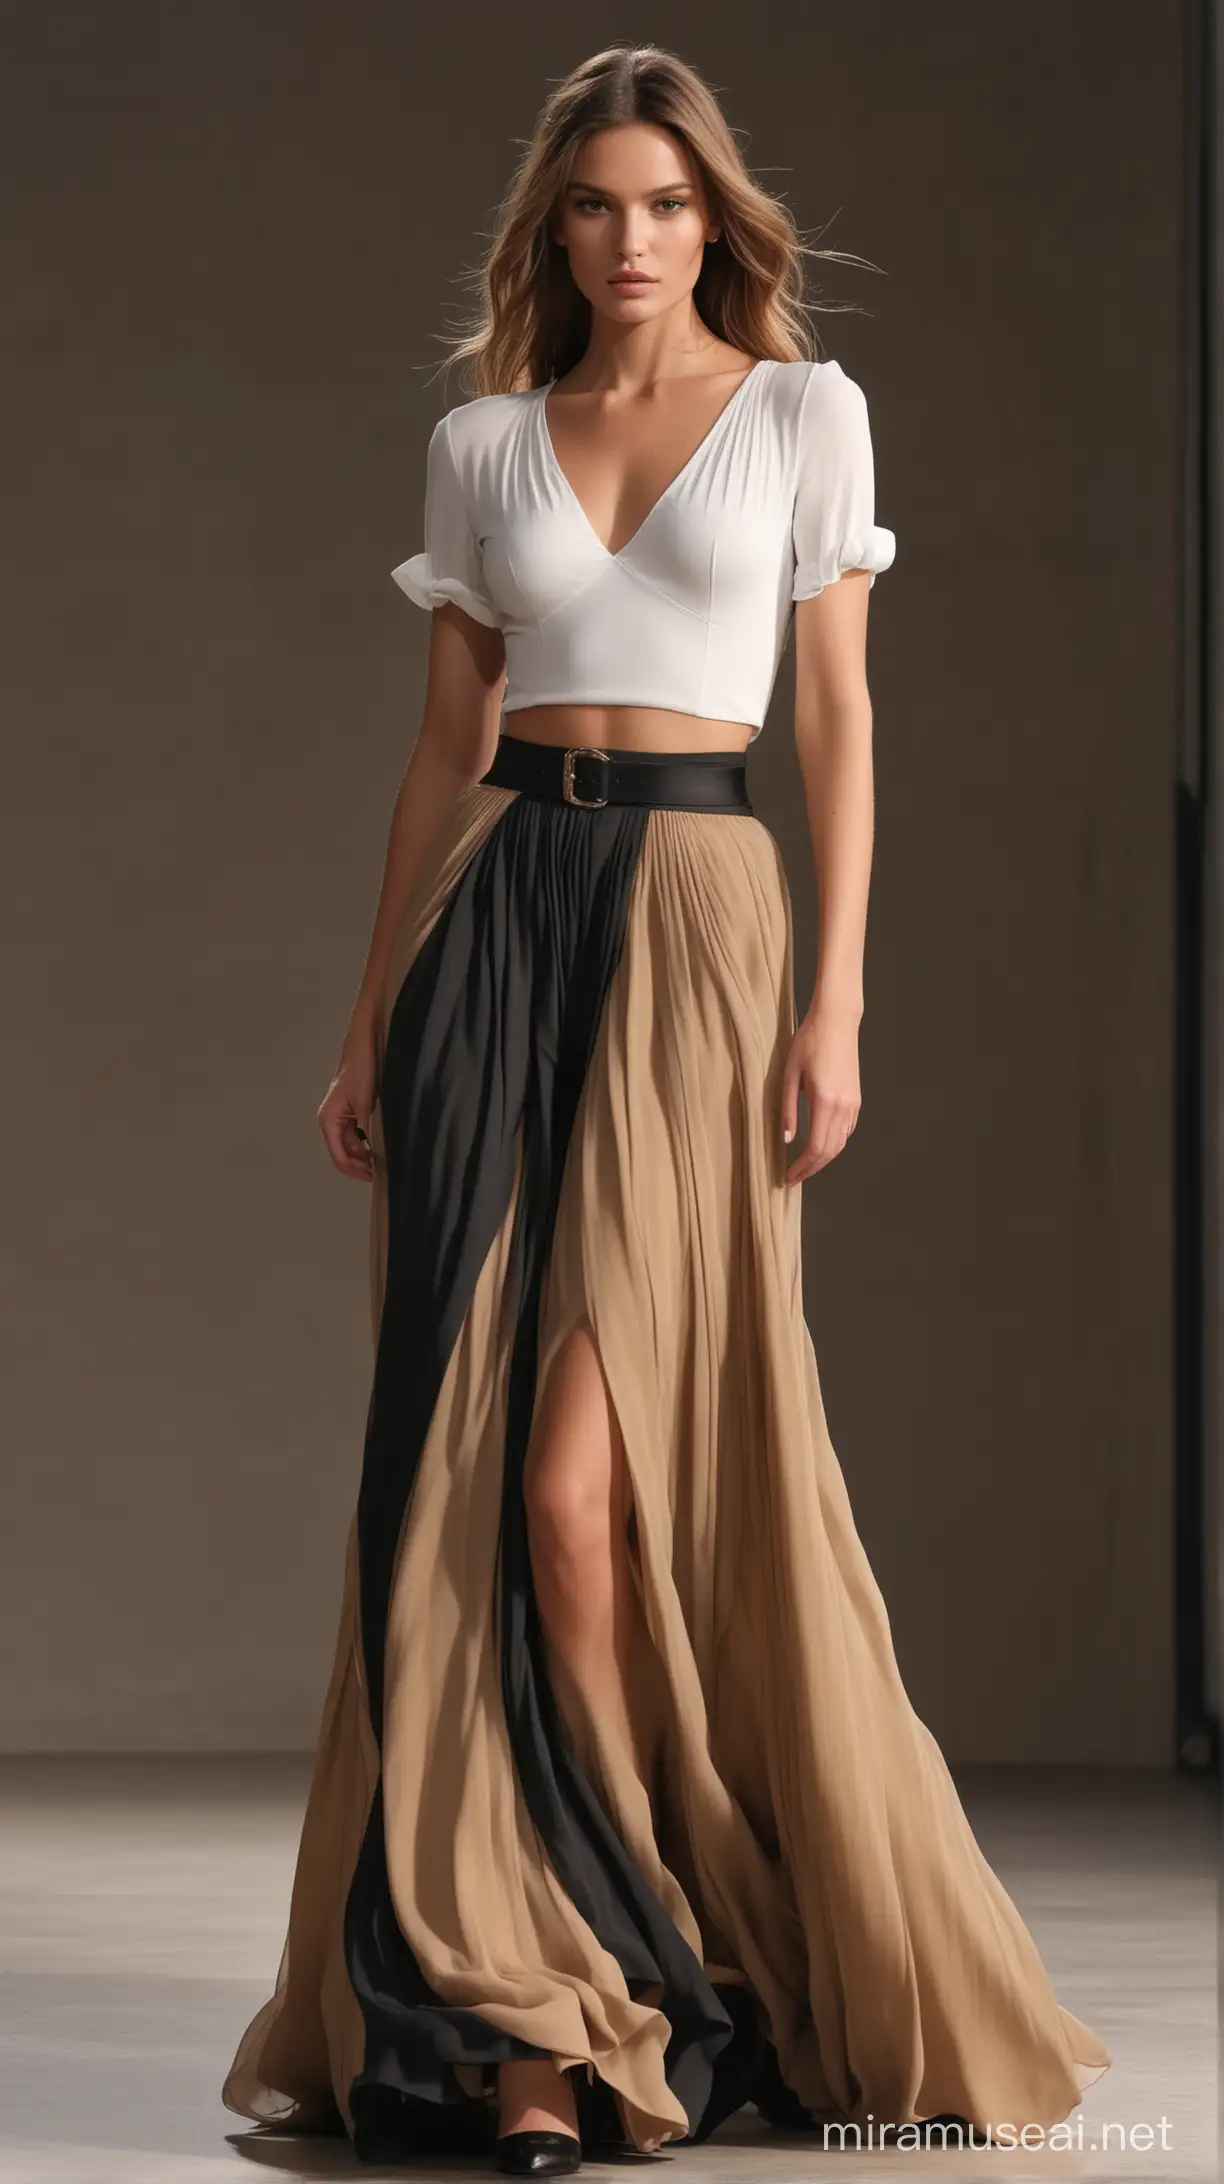 Elegant Montelago Brand Runway Pose HyperRealistic Supermodel in Flowy Chiffon Skirt